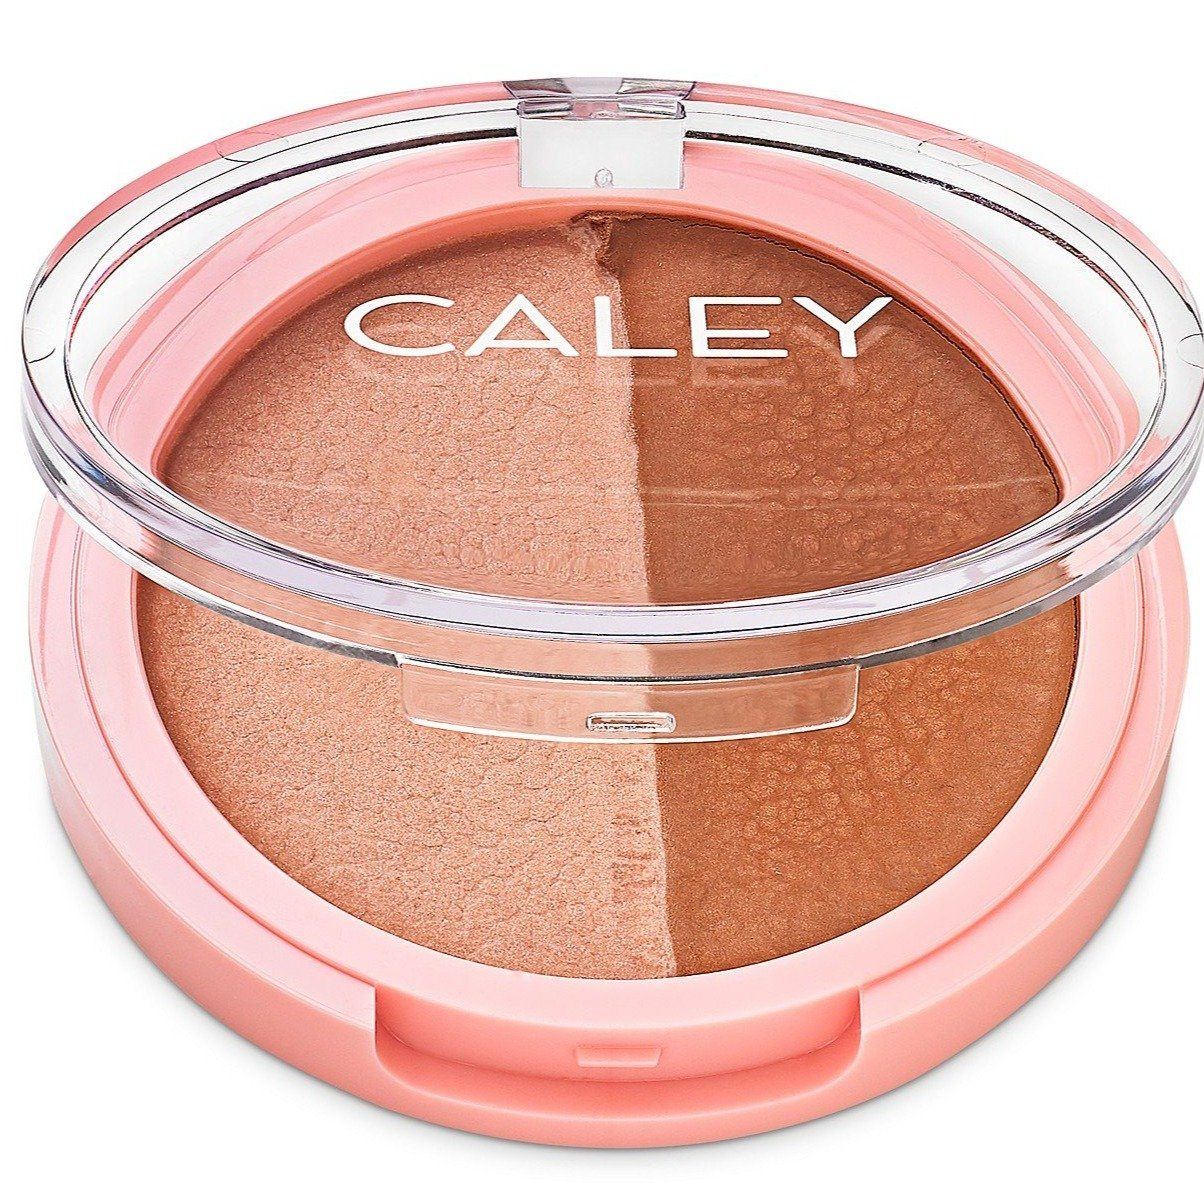 Bundle Beach Babe Cream-to-Glow Face Makeup Caley Peach Glow Signature Glow 